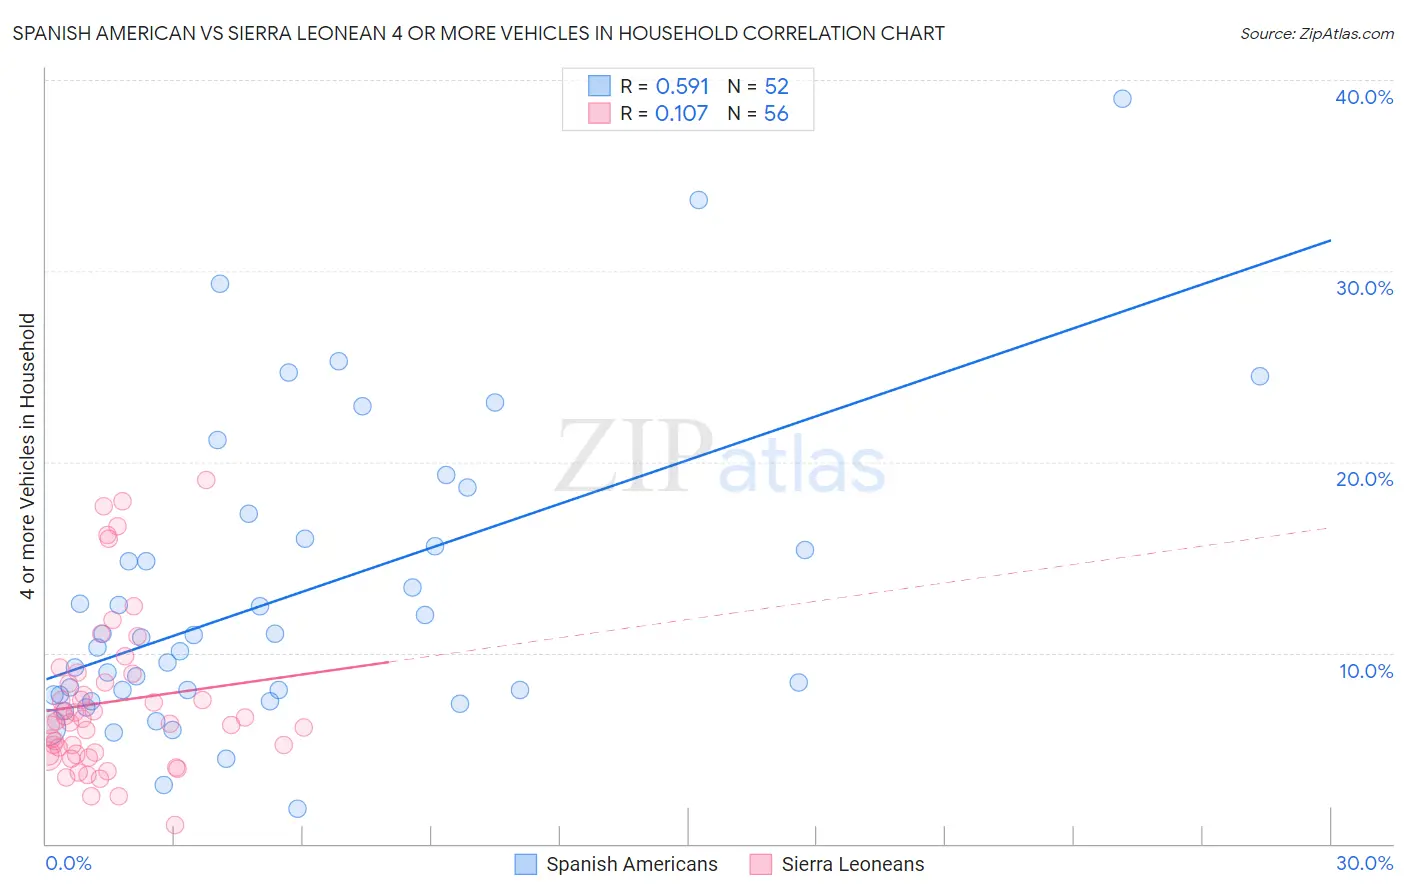 Spanish American vs Sierra Leonean 4 or more Vehicles in Household